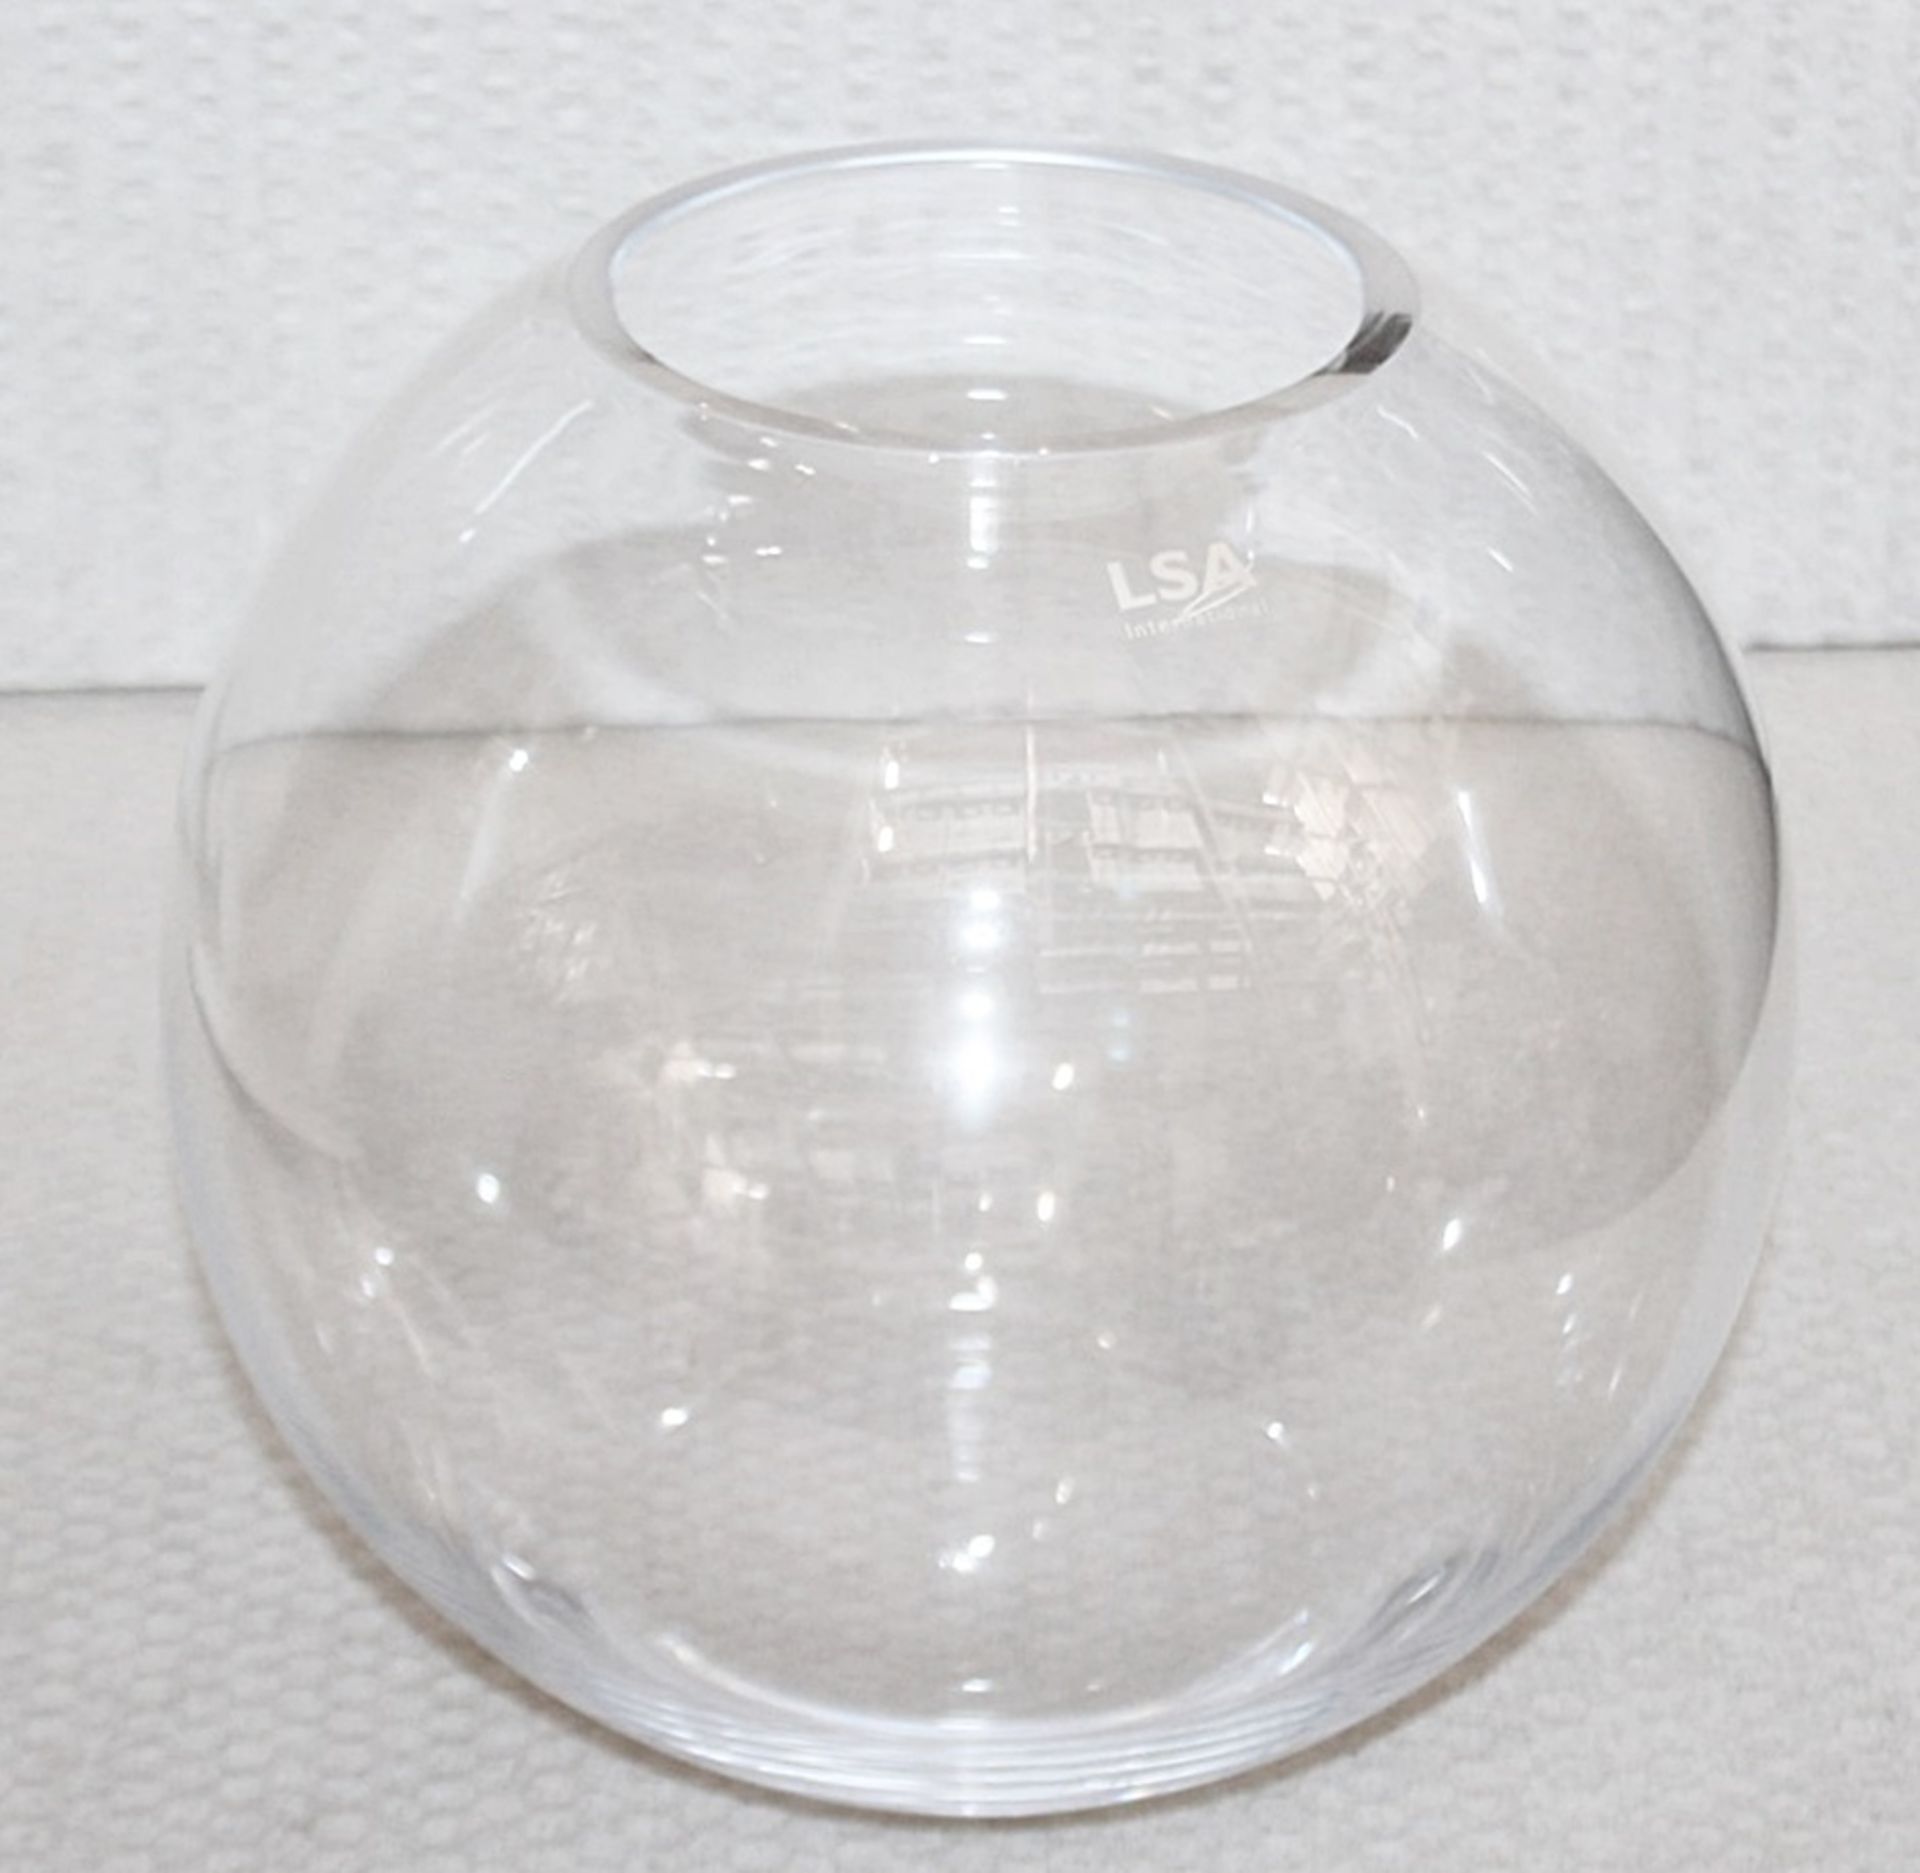 1 x LSA 'Globe' Luxury 24cm Mouthblown Handmade Glass Vase  - Unused Boxed Stock - Image 3 of 9